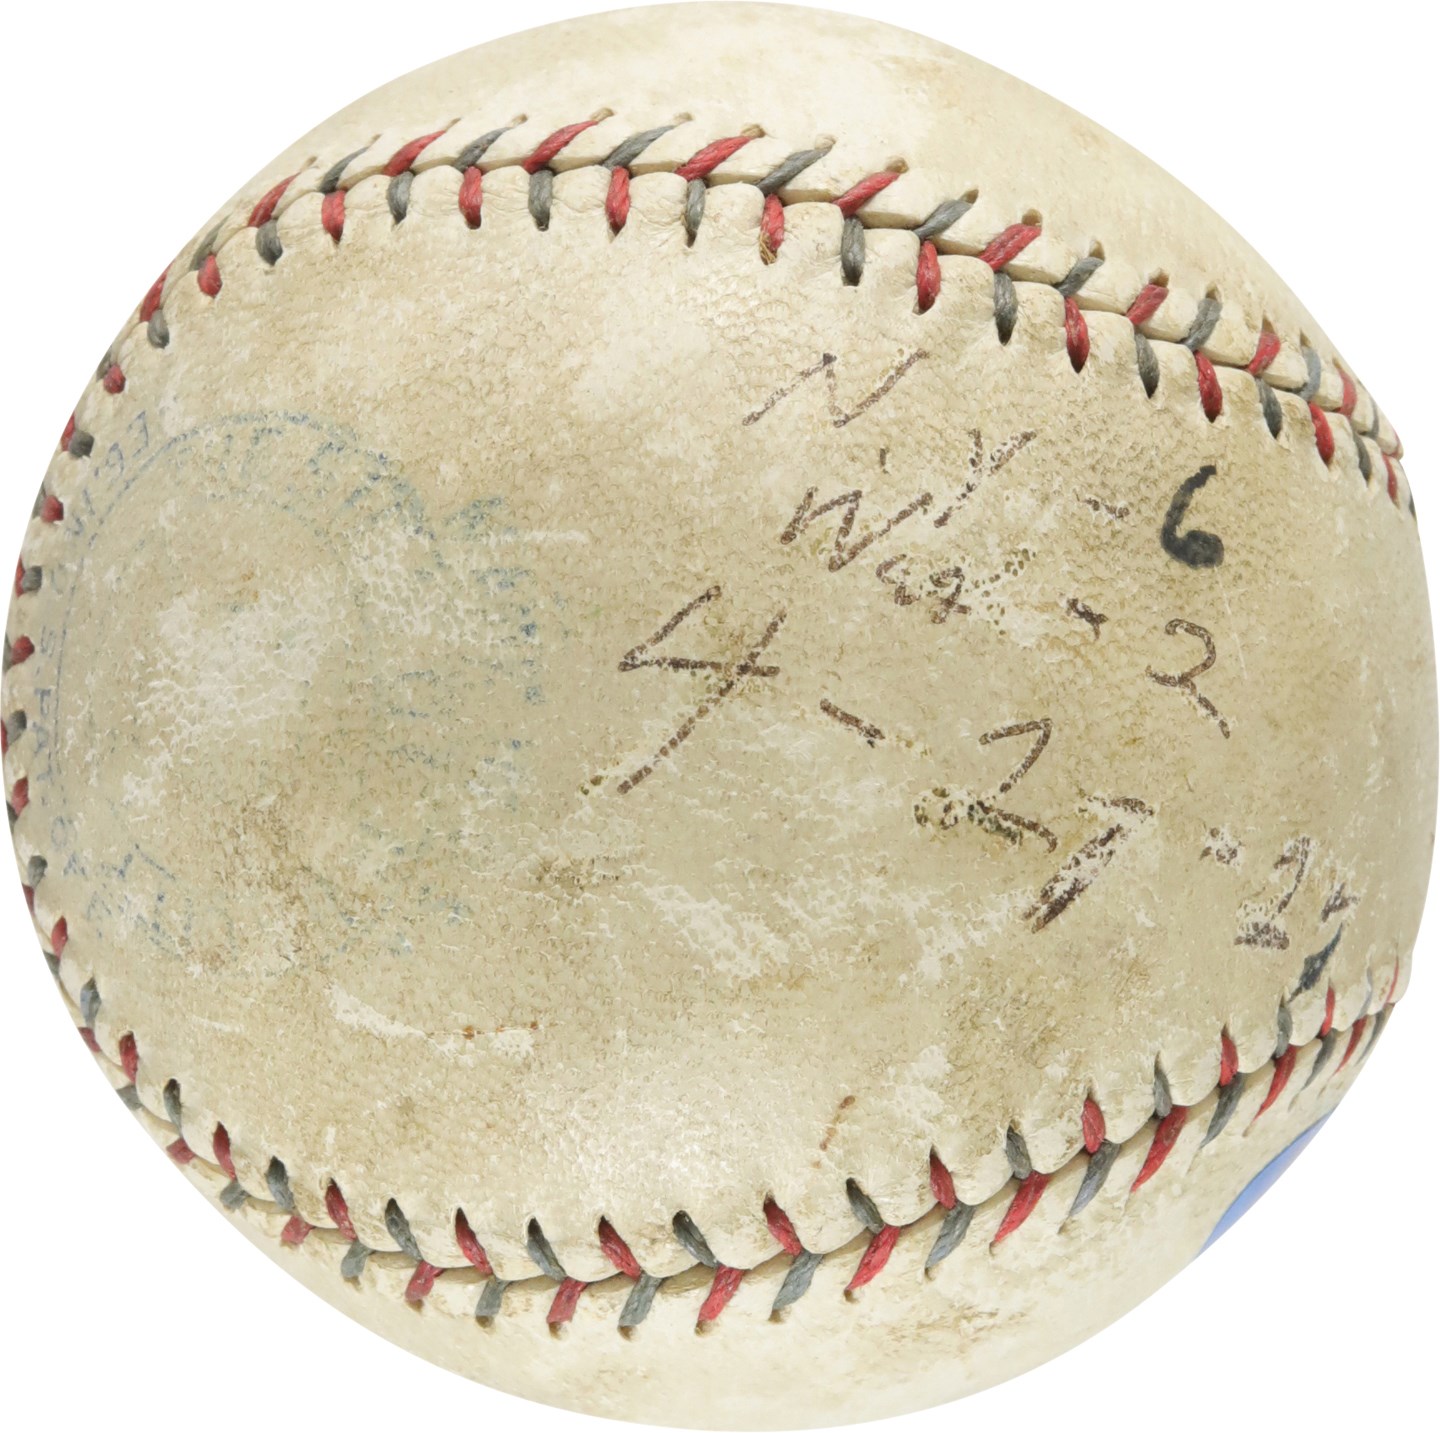 - 4/24/27 New York Yankees vs Washington Senators Game Used Baseball from Babe Ruth's 359th Home Run Game (MEARS)